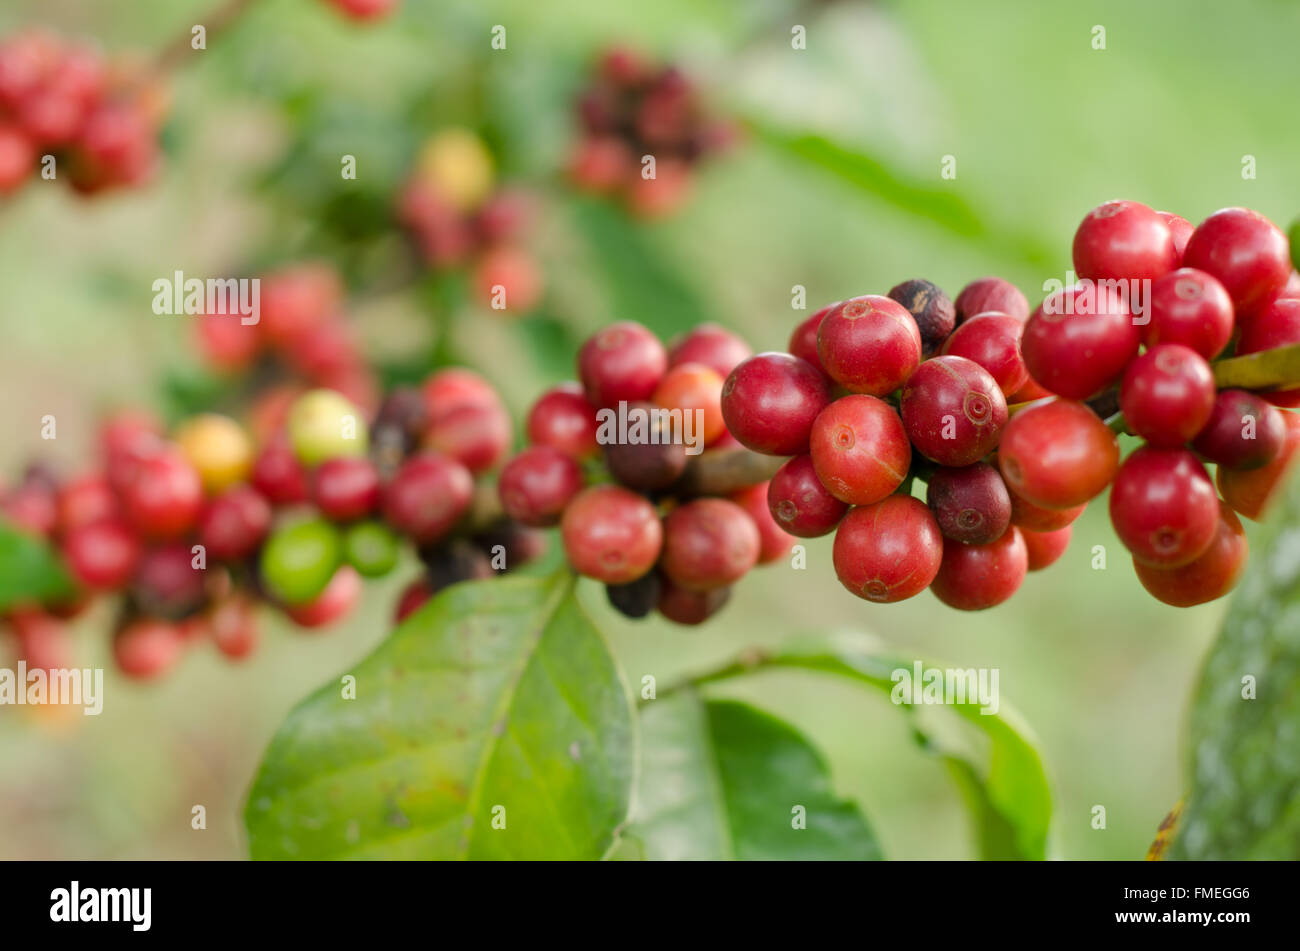 Coffee beans growing on tree Stock Photo